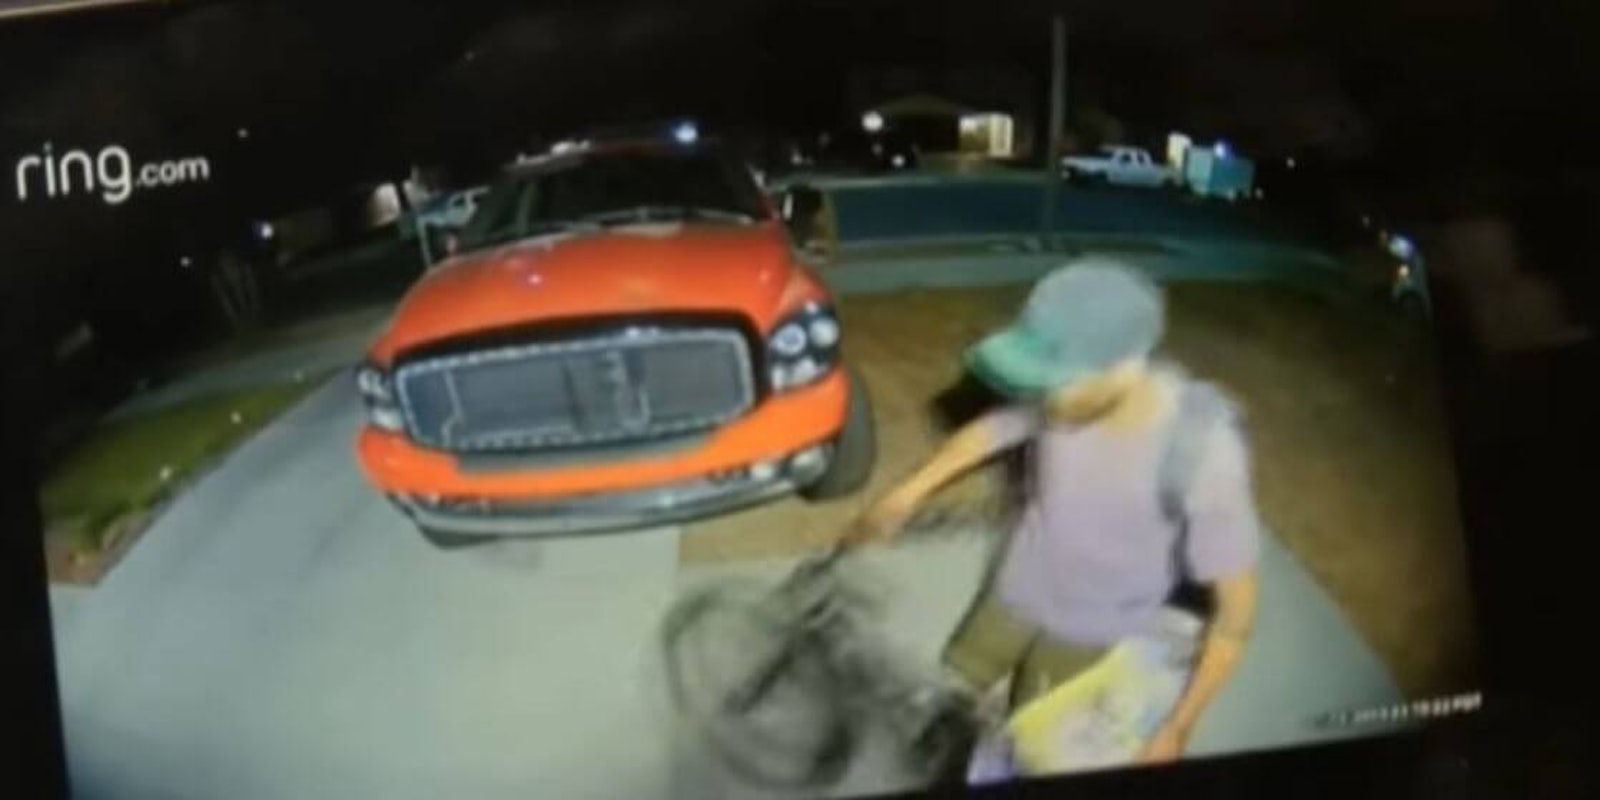 YouTube bike thieves baseball bats